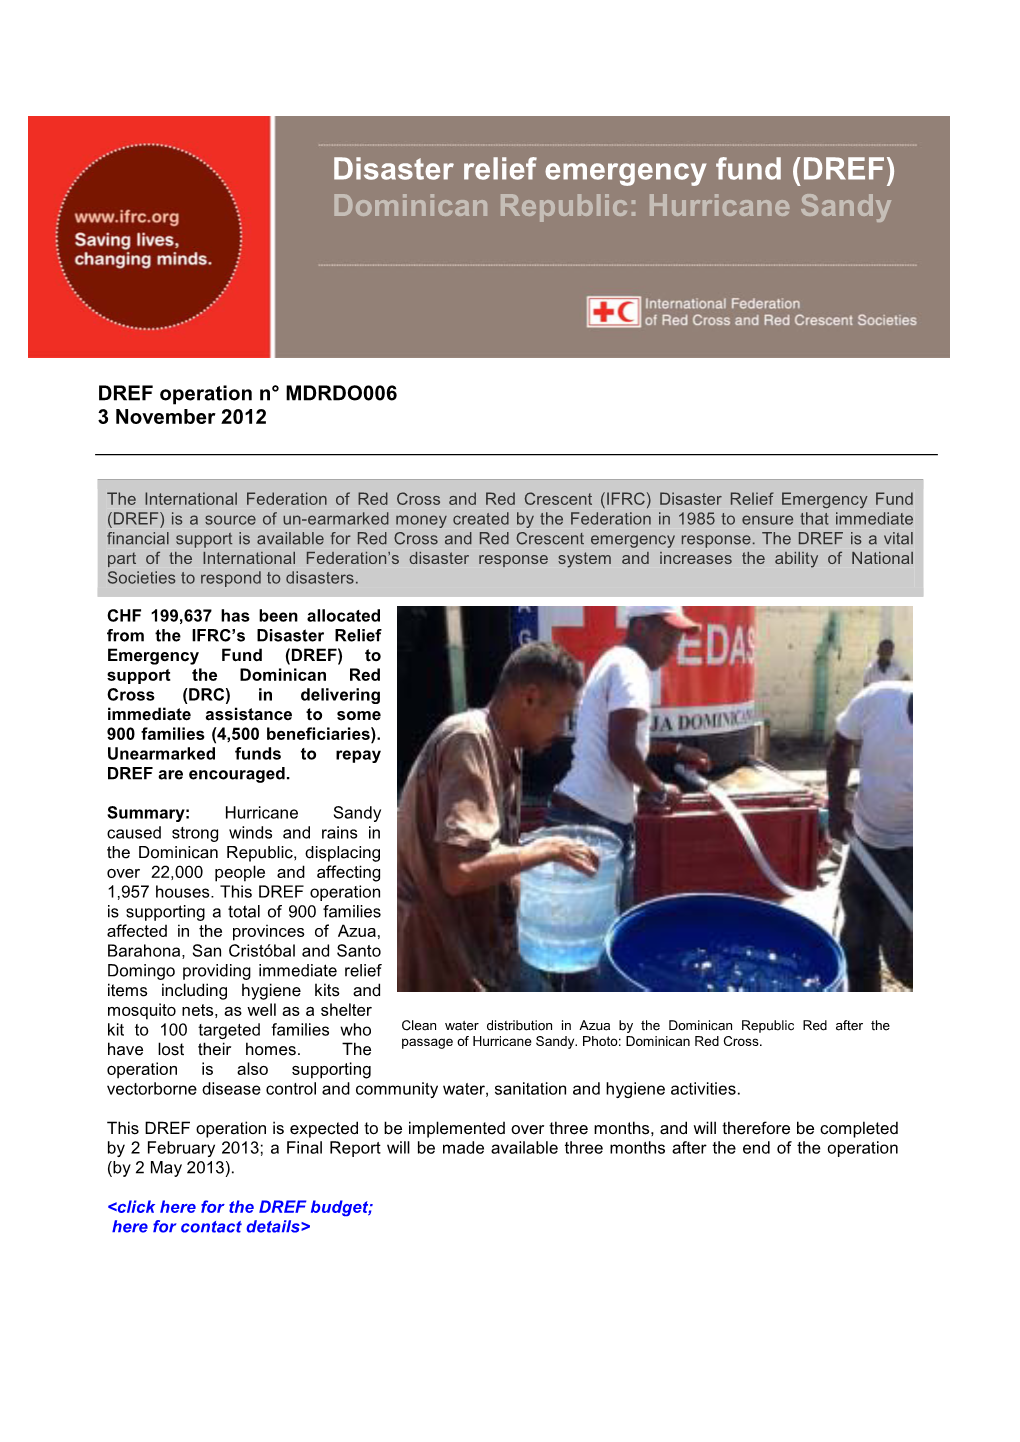 Disaster Relief Emergency Fund (DREF) Dominican Republic: Hurricane Sandy